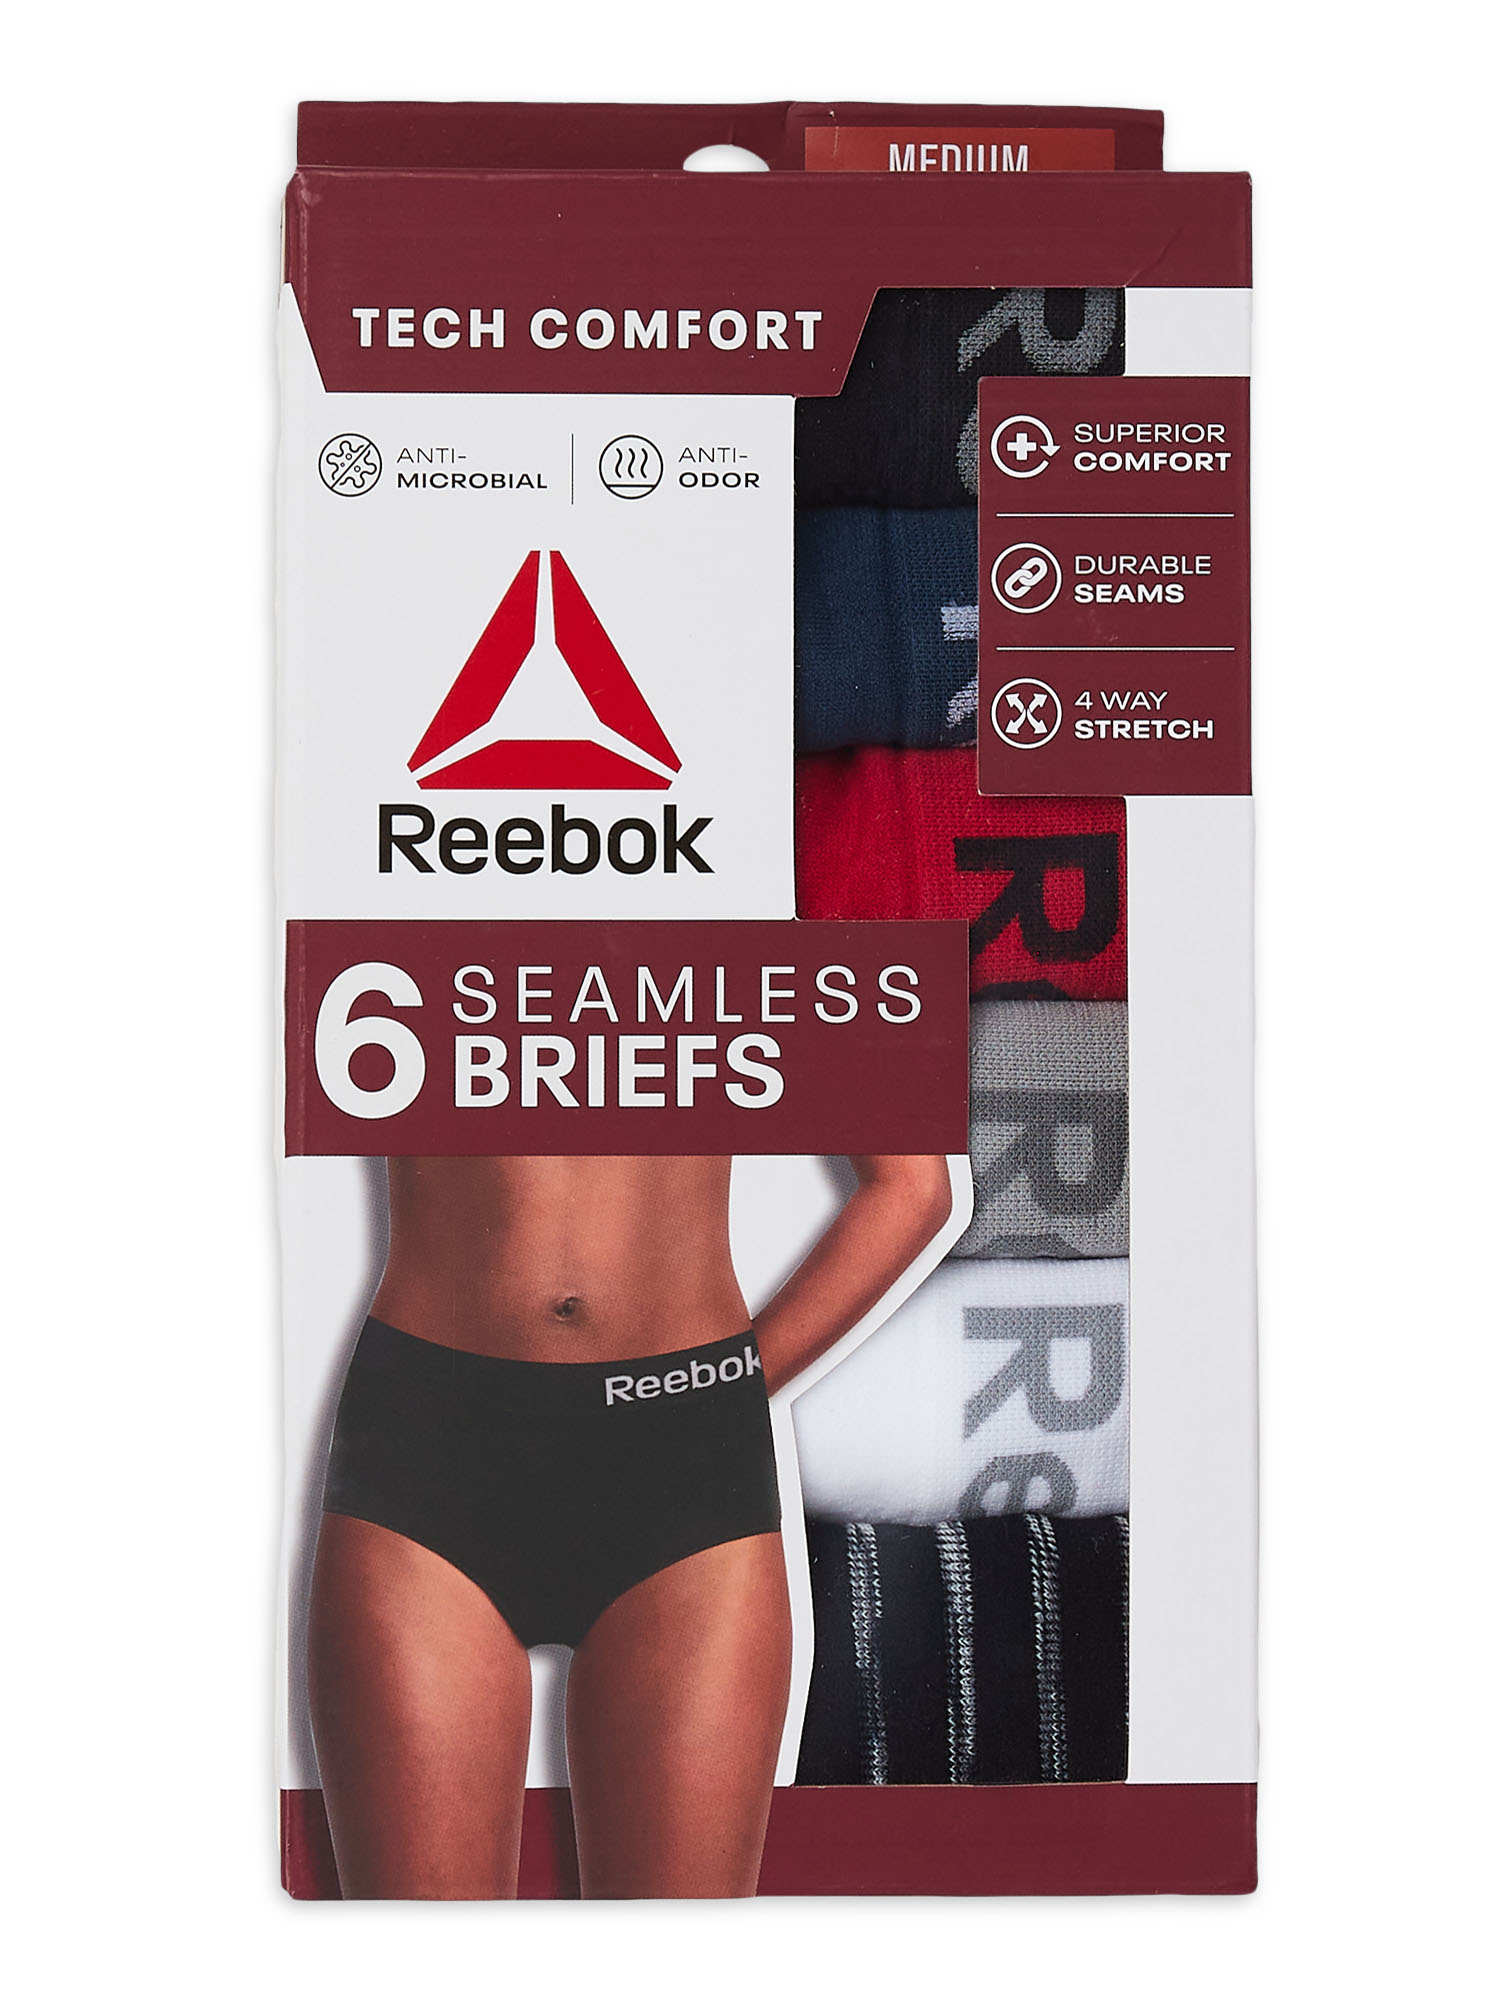 Reebok Women's Seamless Briefs,6-Pack, Sizes XS- 3XL - image 5 of 12